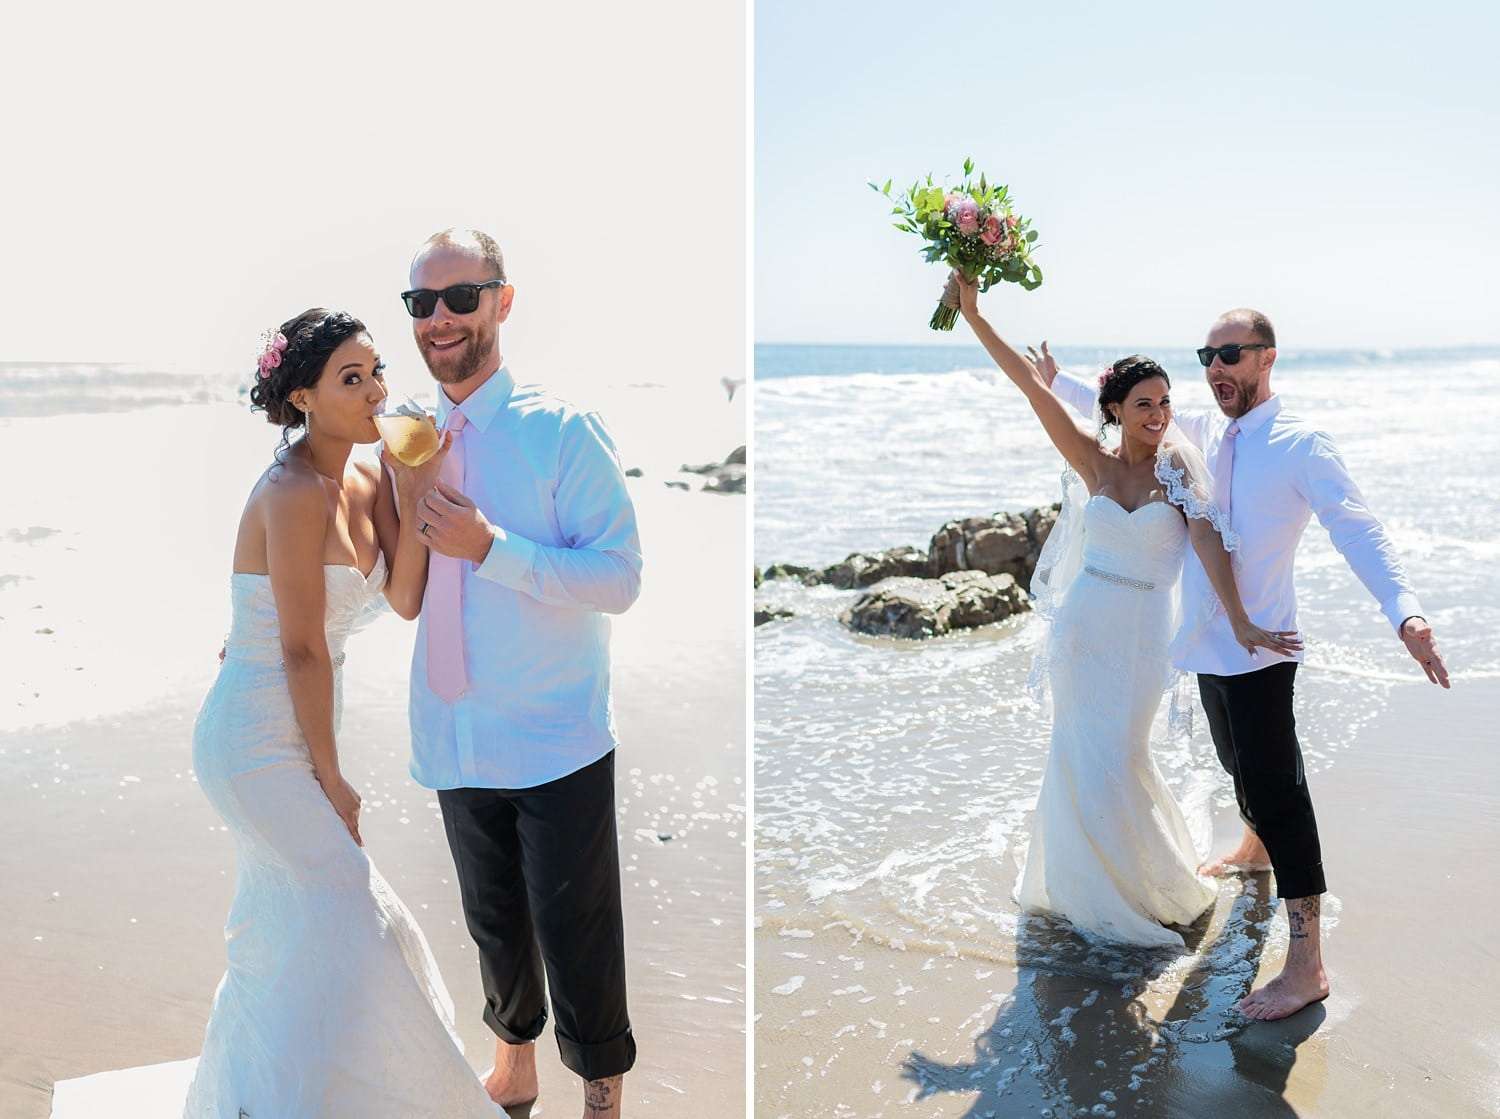 Hendry’s beach wedding photos